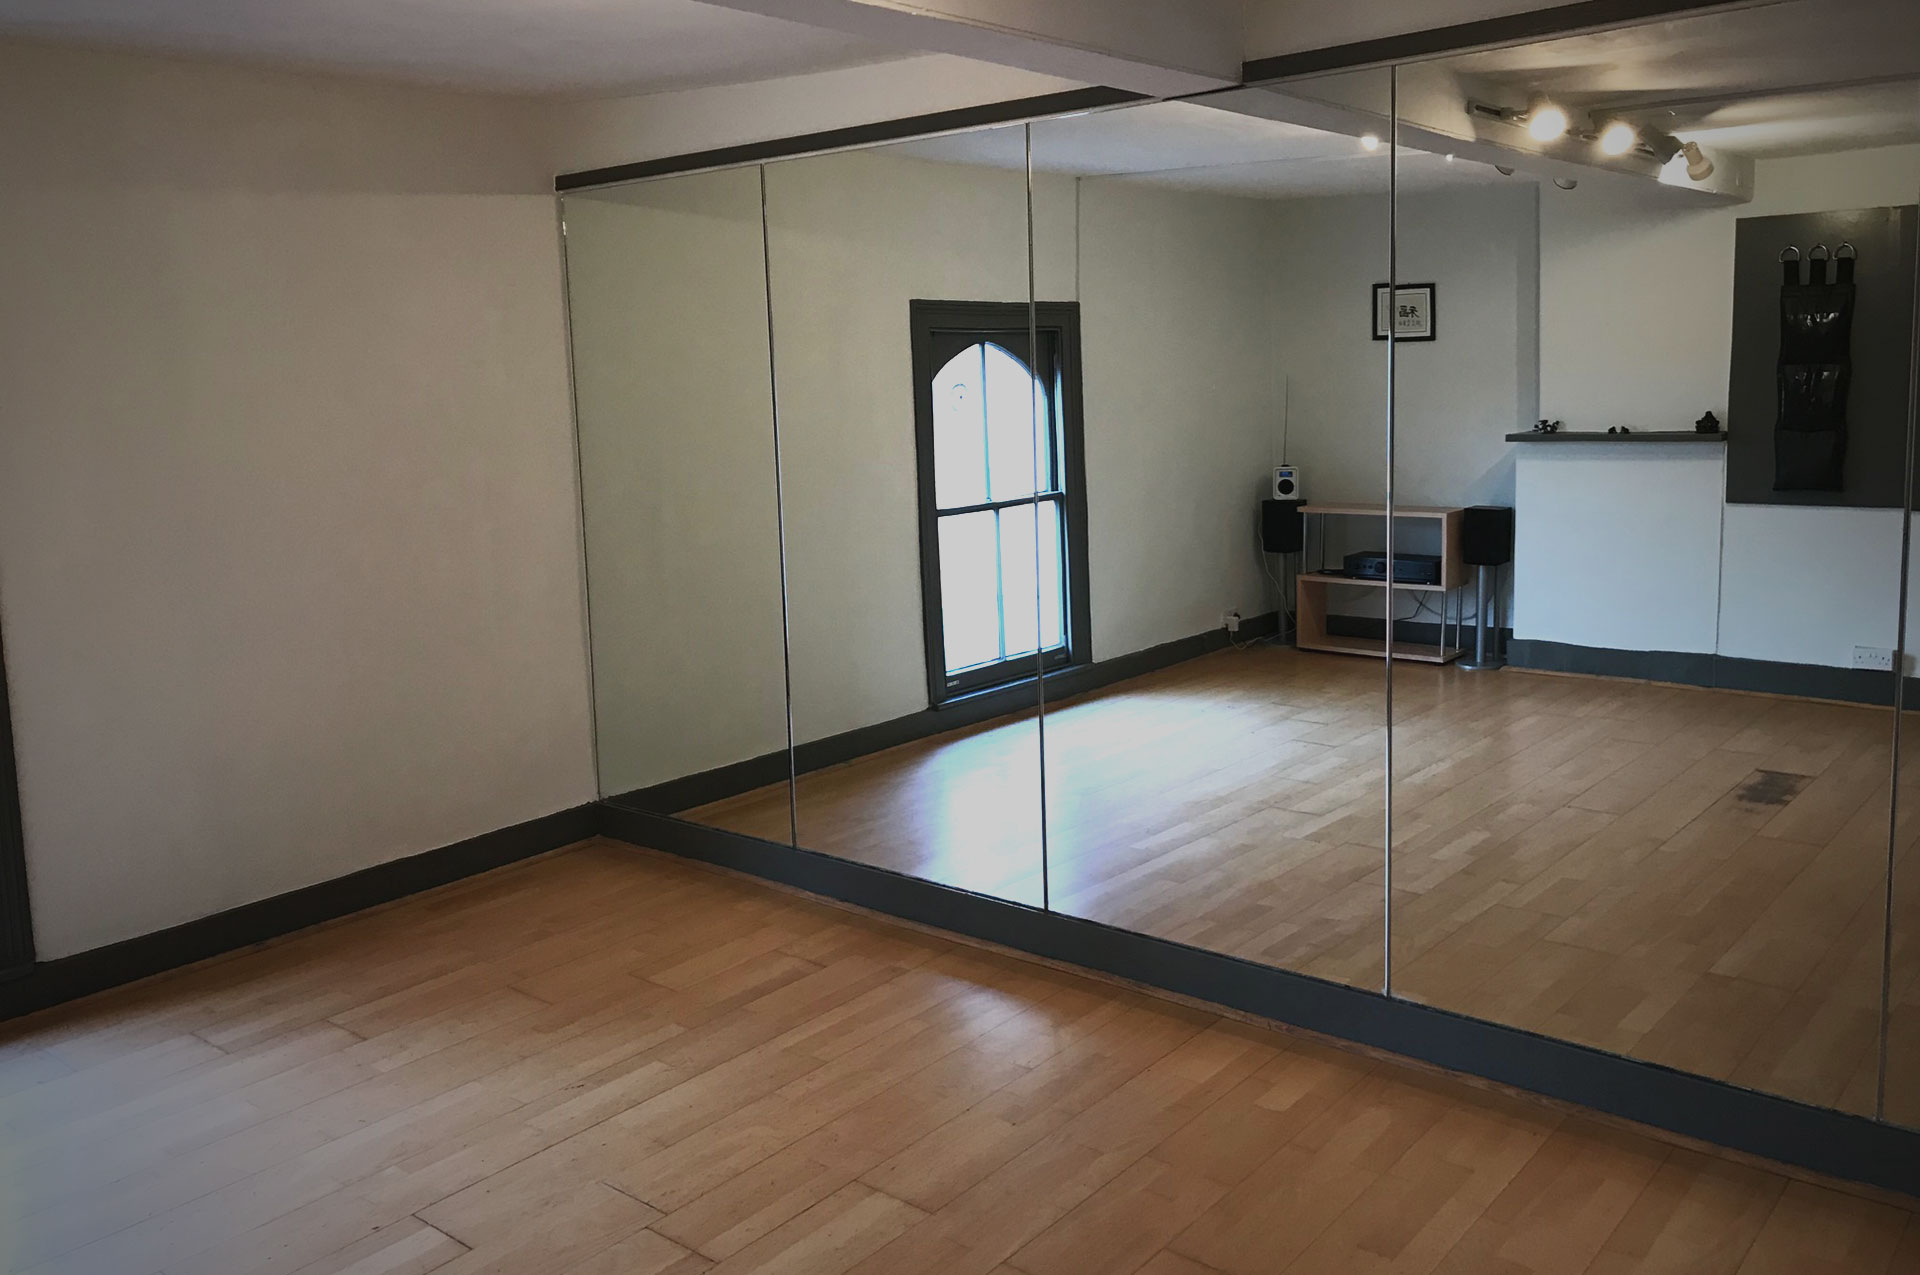 New Malden Studios | Space Hire For Yoga, Pilates, Dance, Martial Arts